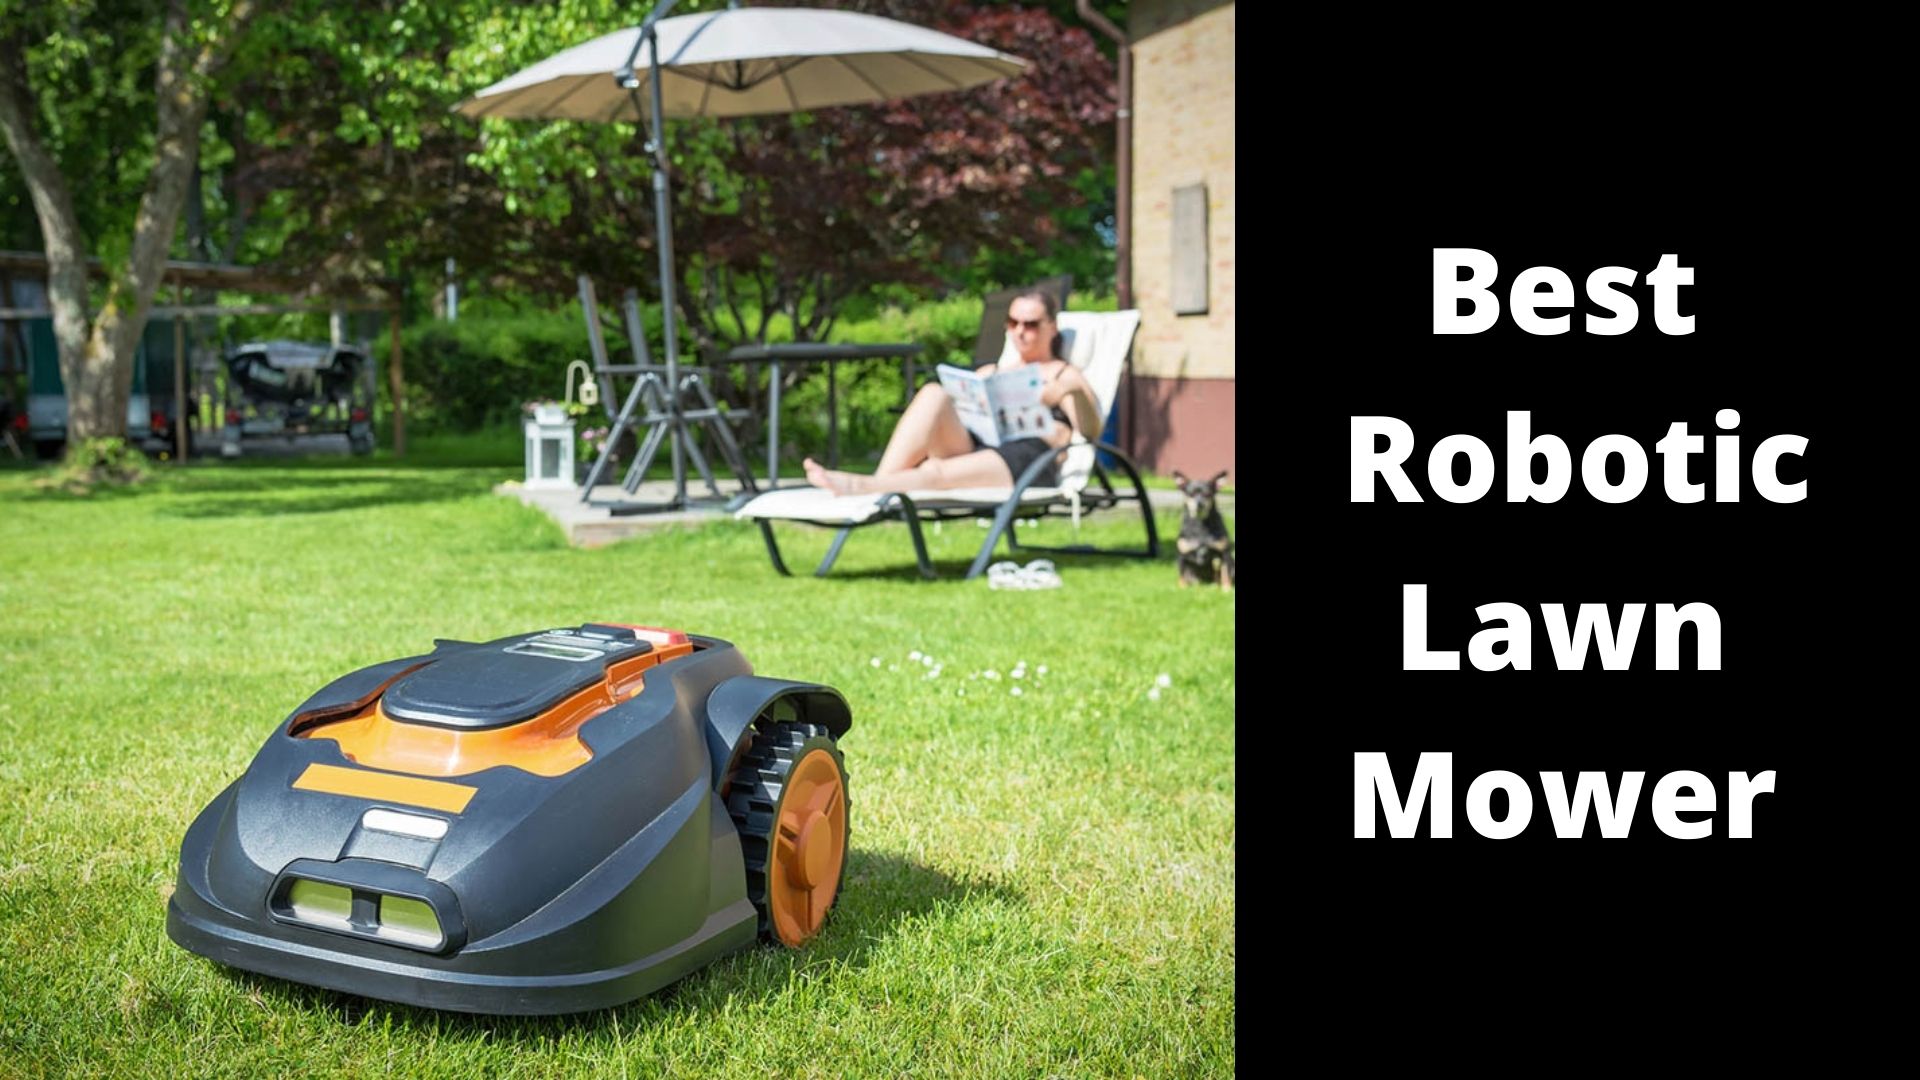 Best Robotic Lawn Mower